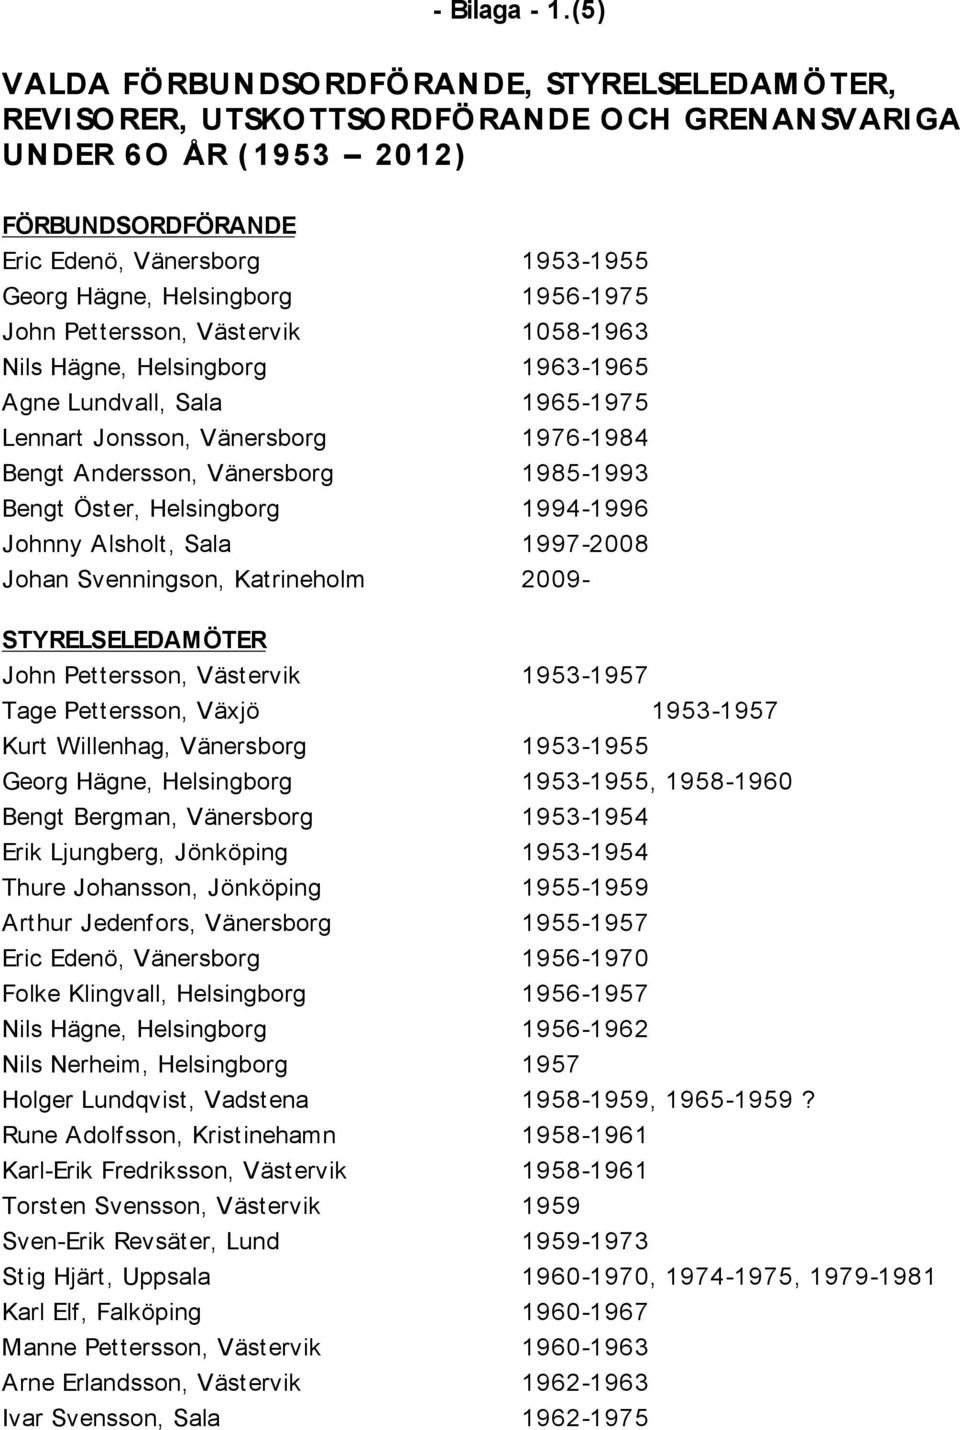 Helsingborg 1956-1975 John Pettersson, Västervik 1058-1963 Nils Hägne, Helsingborg 1963-1965 Agne Lundvall, Sala 1965-1975 Lennart Jonsson, Vänersborg 1976-1984 Bengt Andersson, Vänersborg 1985-1993